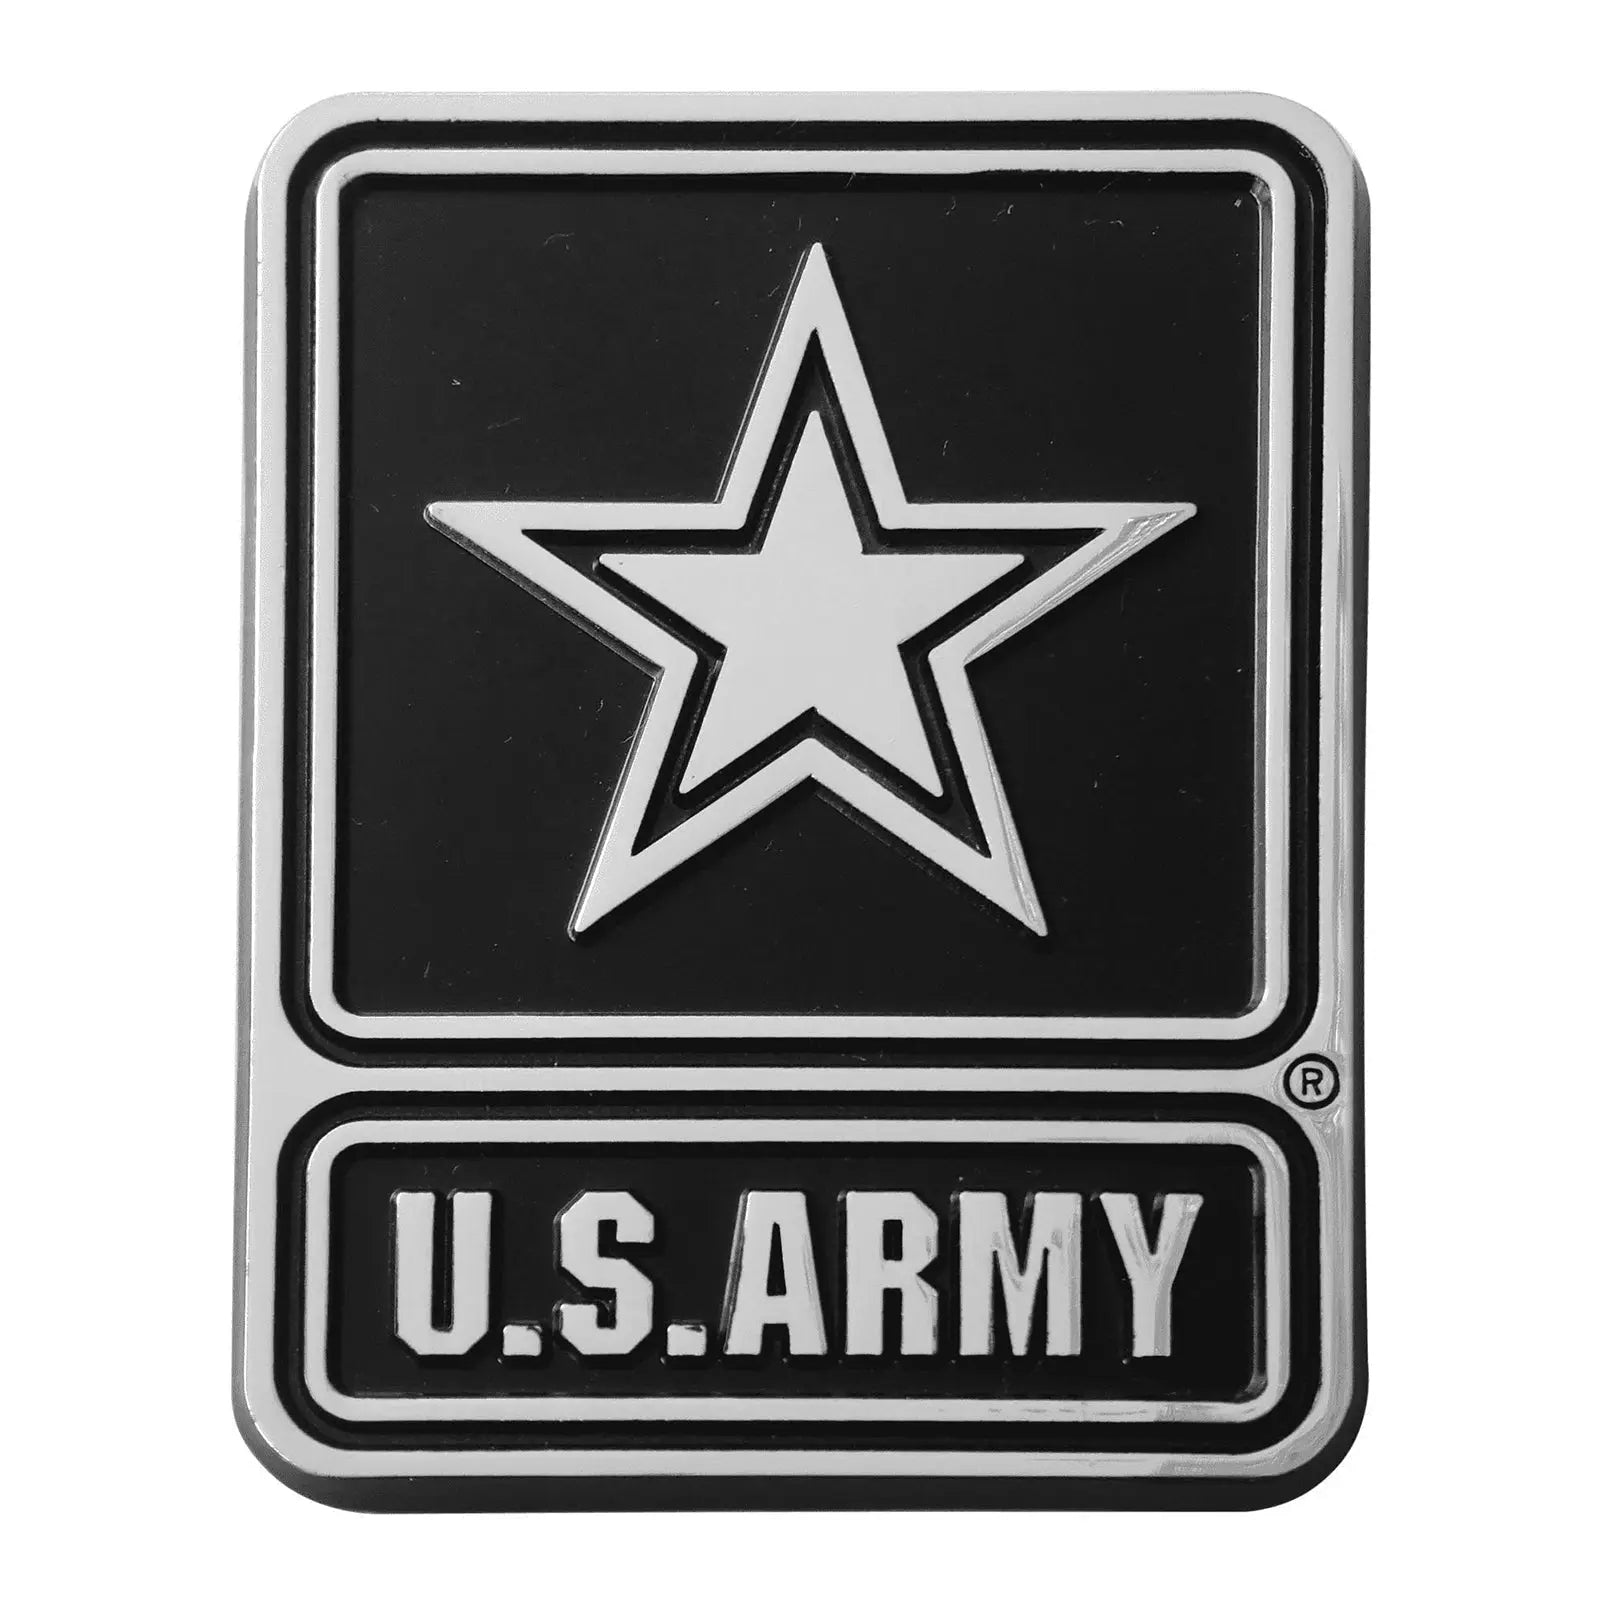 U.S Army Solid Metal Chrome Plated Car Auto Emblem 